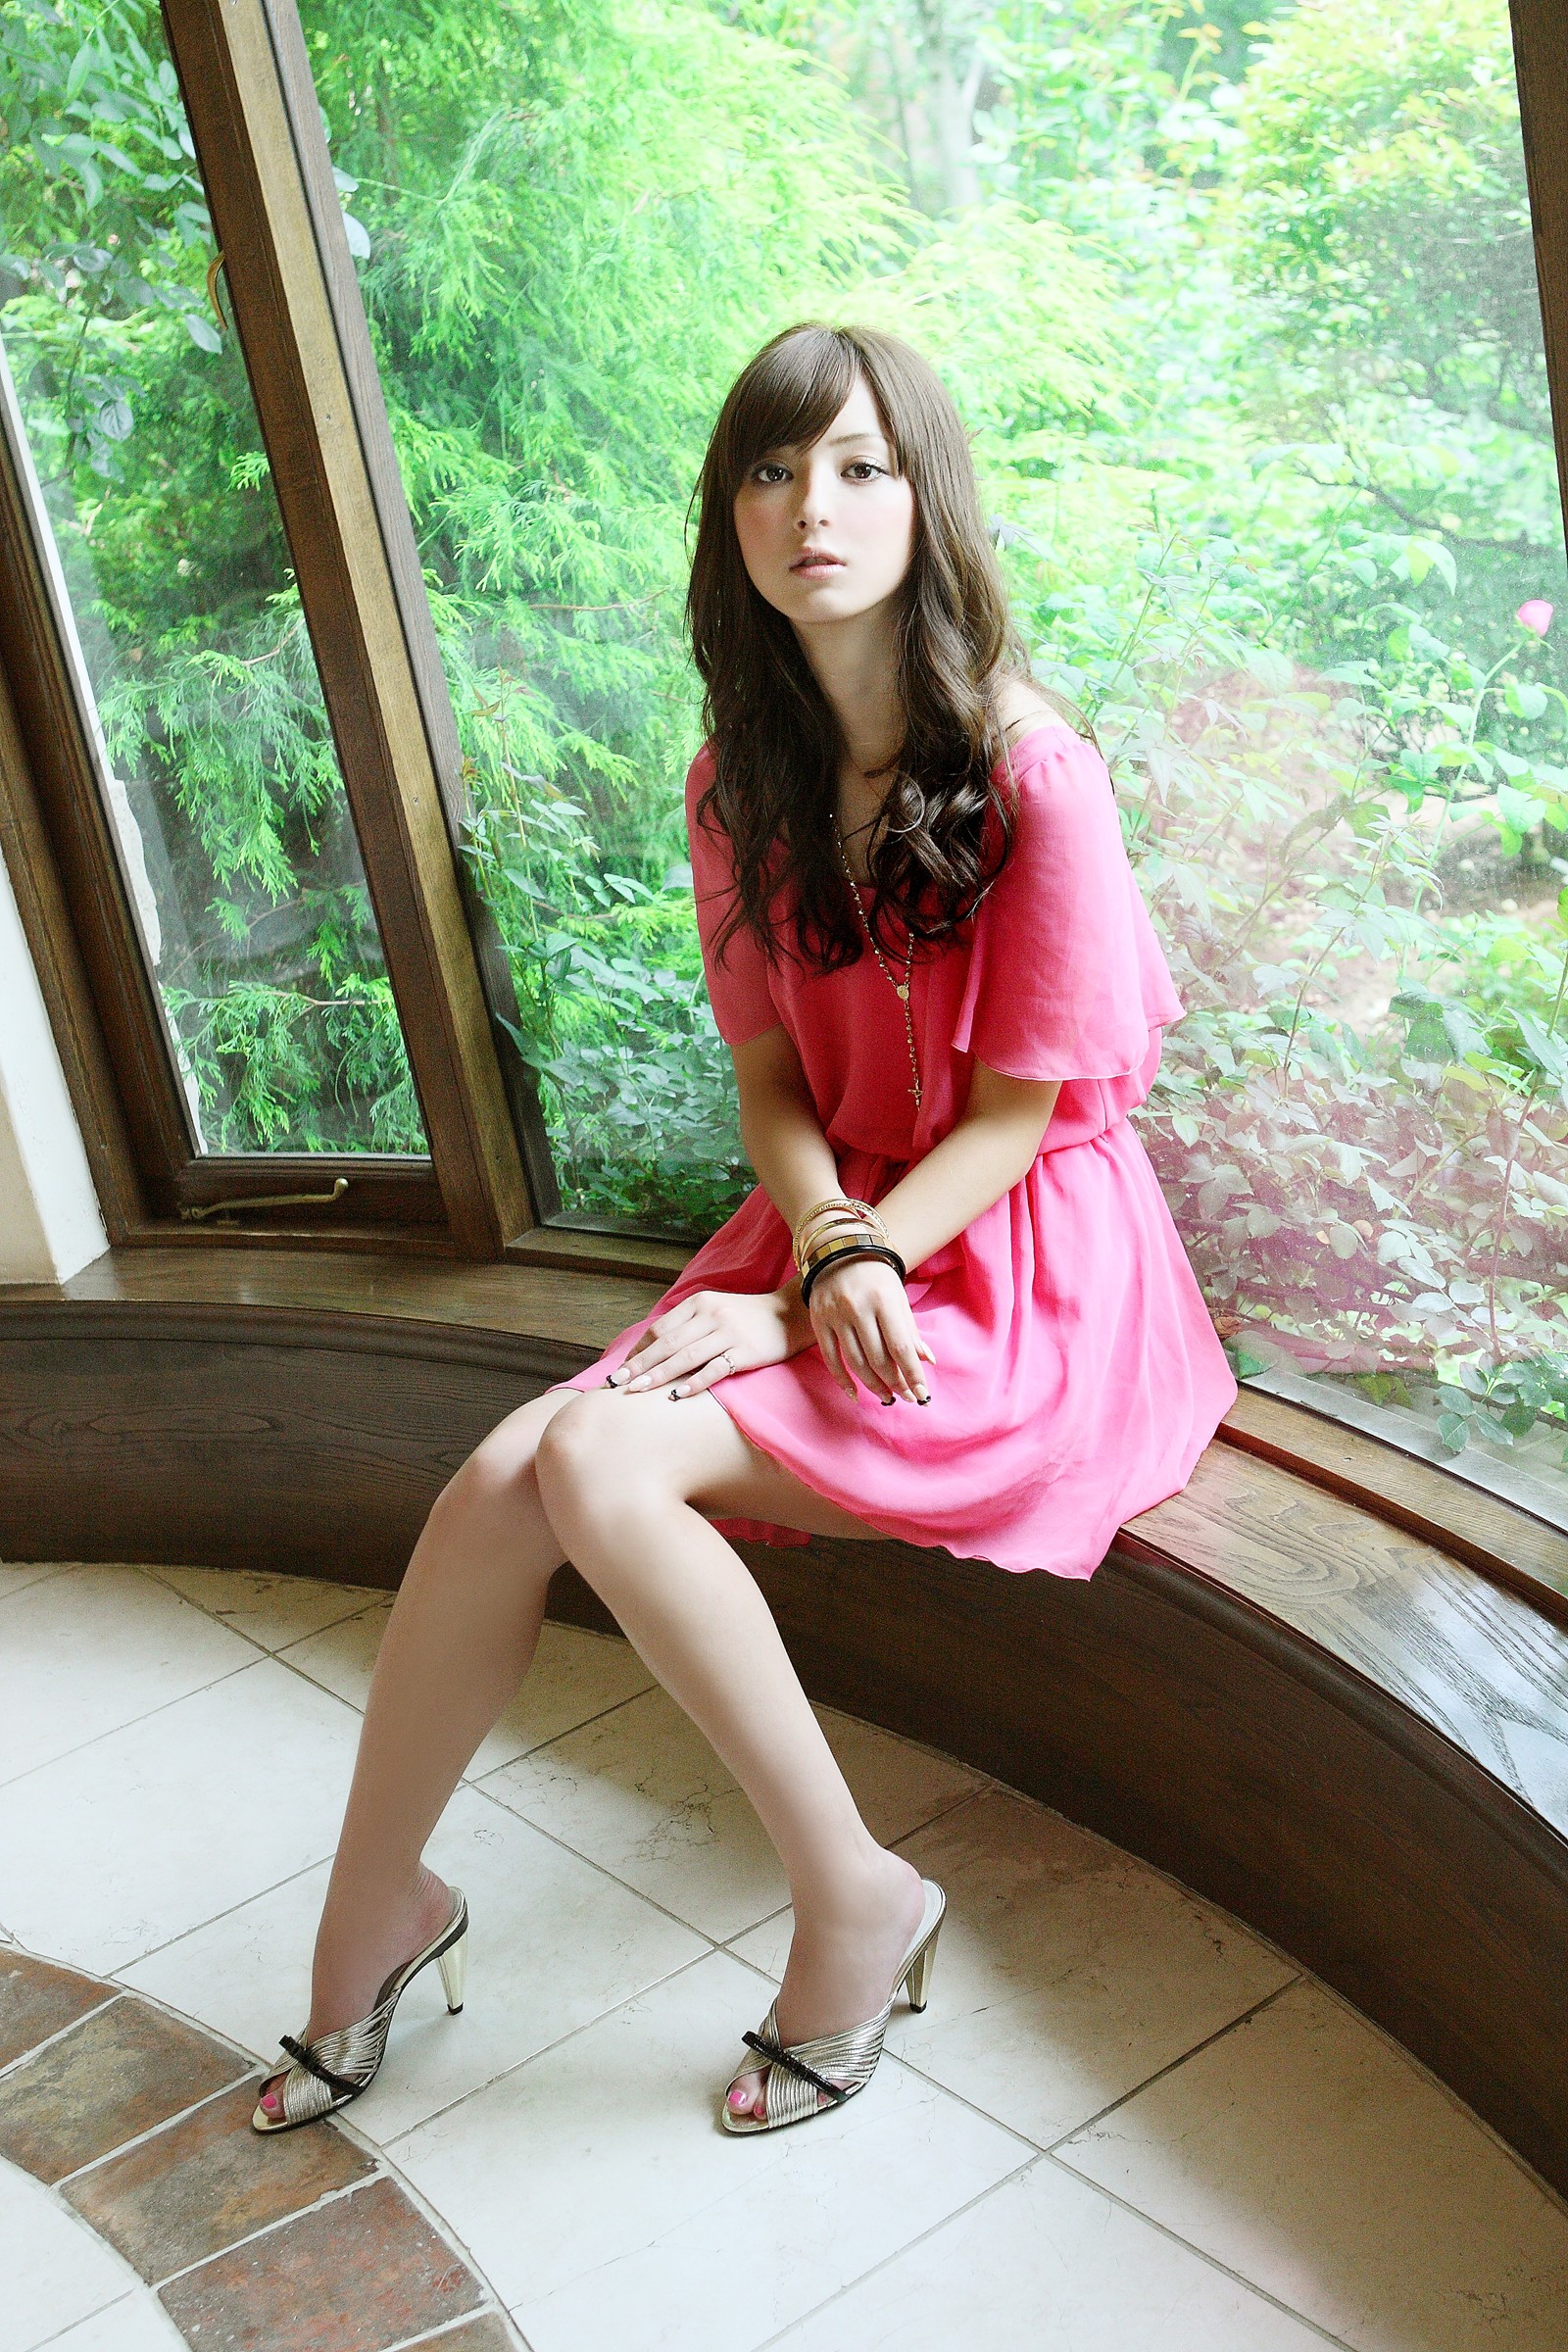 Sasaki Nozomi Model Asian Japanese Women Sitting High Heels Window Brunette Dress Pink Dress 1600x2400